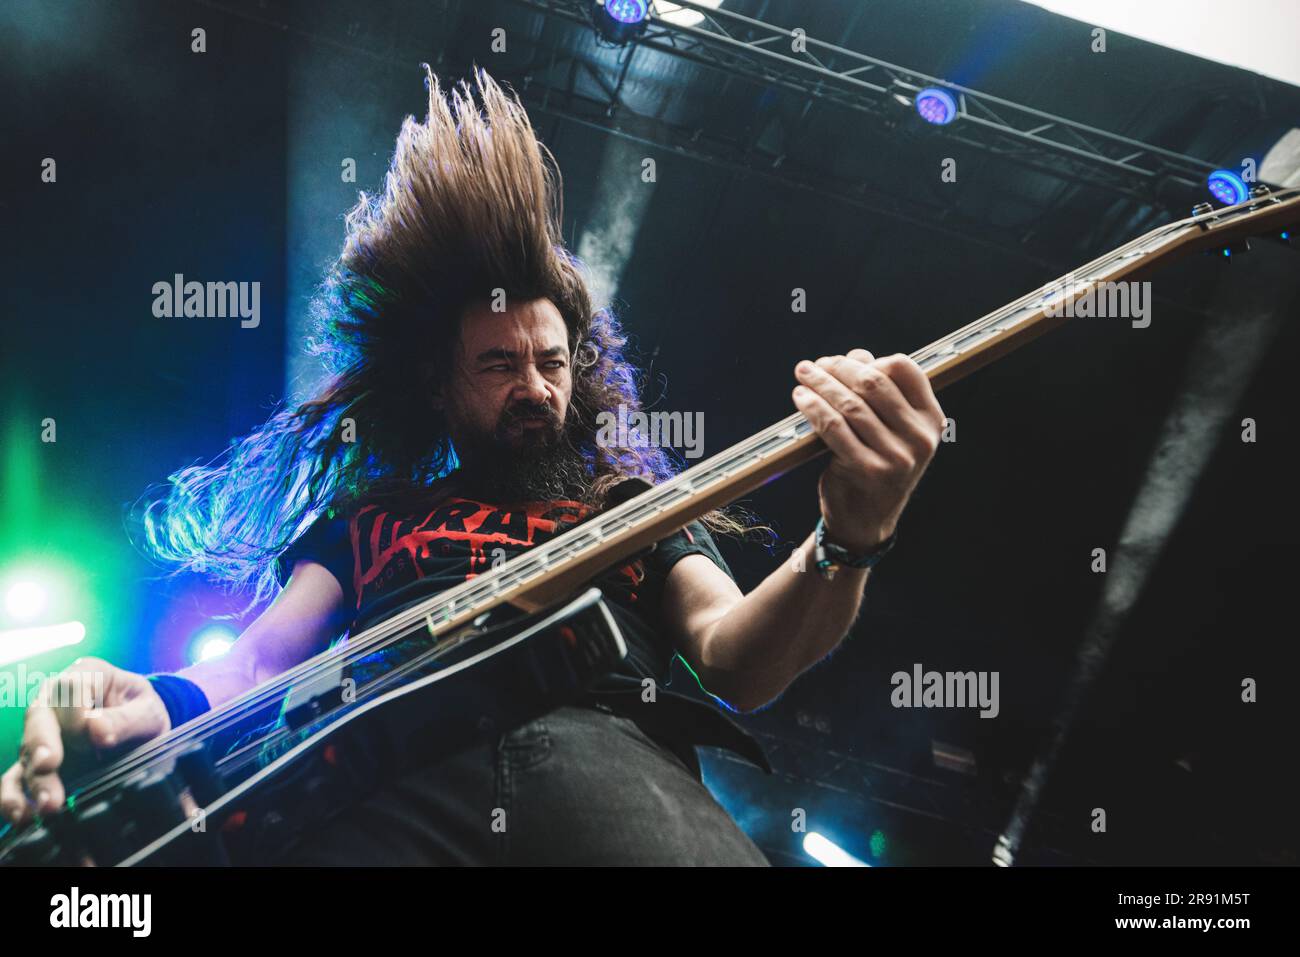 Copenhagen, Denmark. 16th, June 2023. The Spanish thrash metal band Angelus  Apatrida performs a live concert during the Danish heavy metal festival  Copenhell 2023 in Copenhagen. Here bass player Jose Izquierdo is